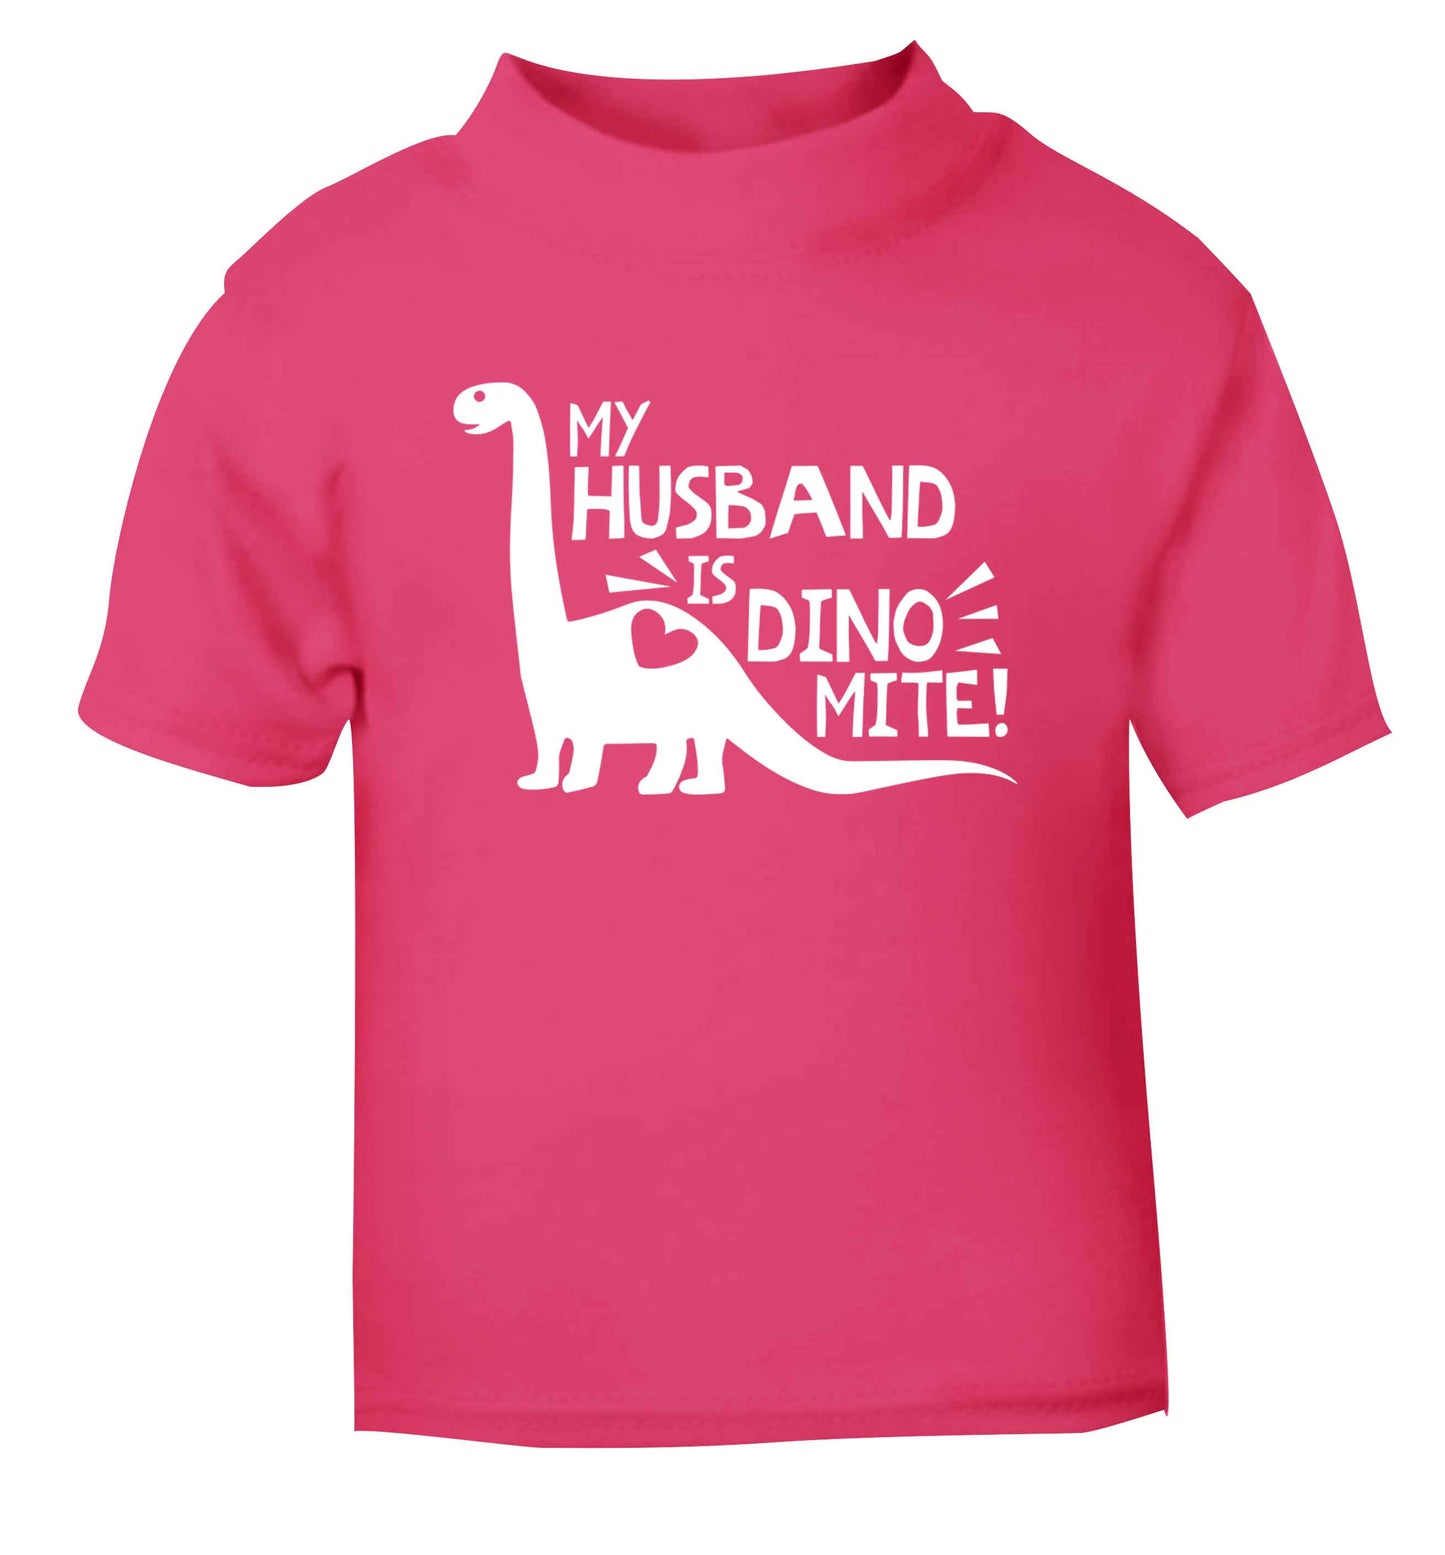 My husband is dinomite! pink Baby Toddler Tshirt 2 Years